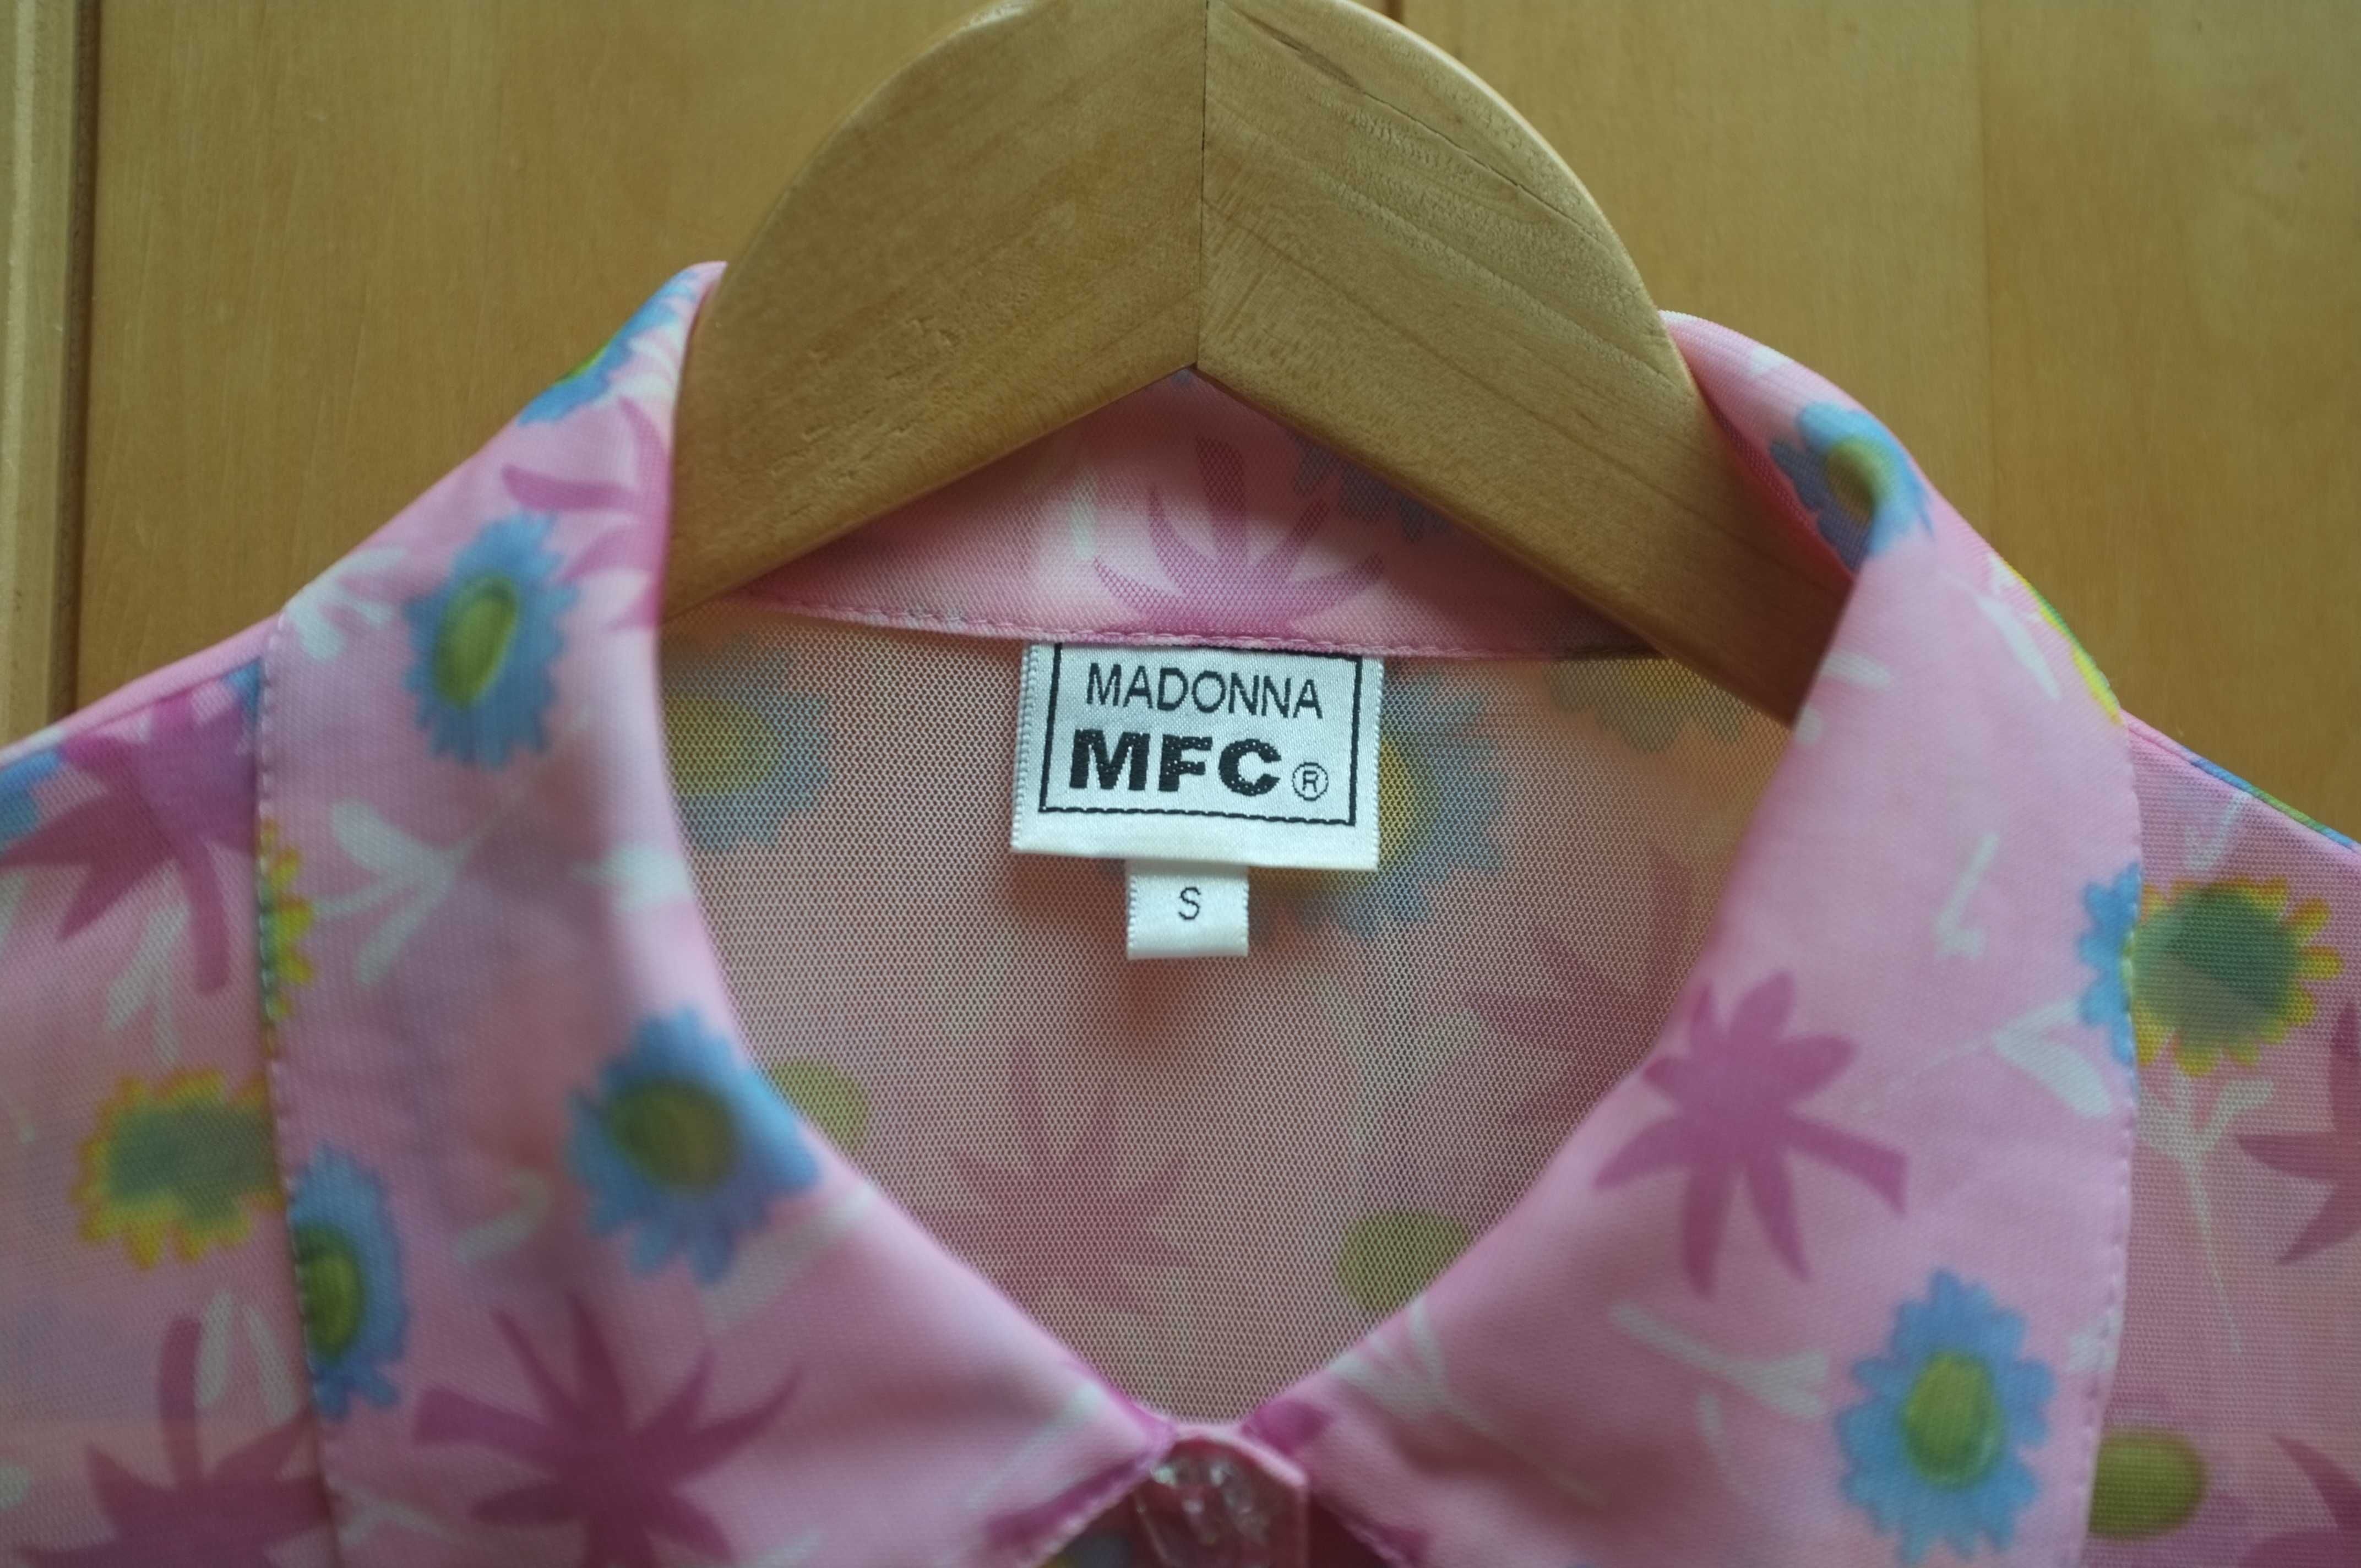 różowy bliźniak bluzka mesh + top Y2K vintage letni lekki kawaii